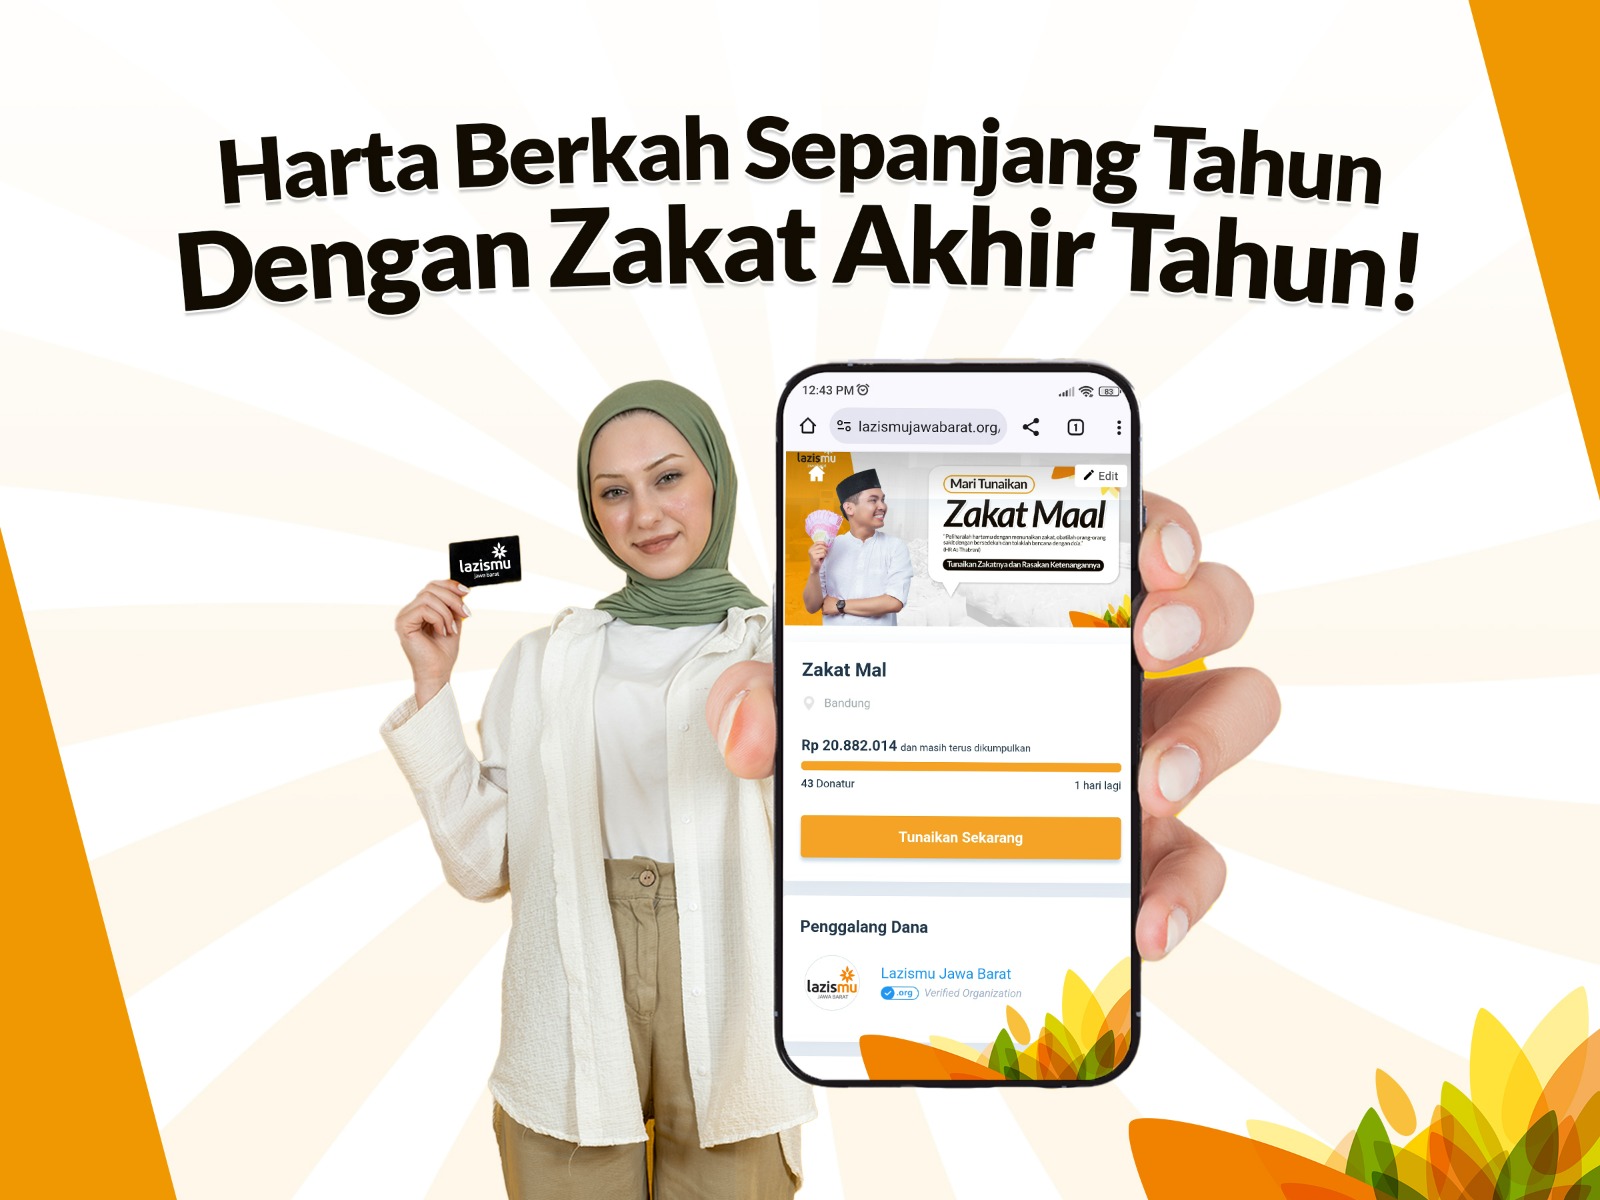 You are currently viewing Harta Berkah di Sepanjang Tahun dengan Zakat Akhir Tahun